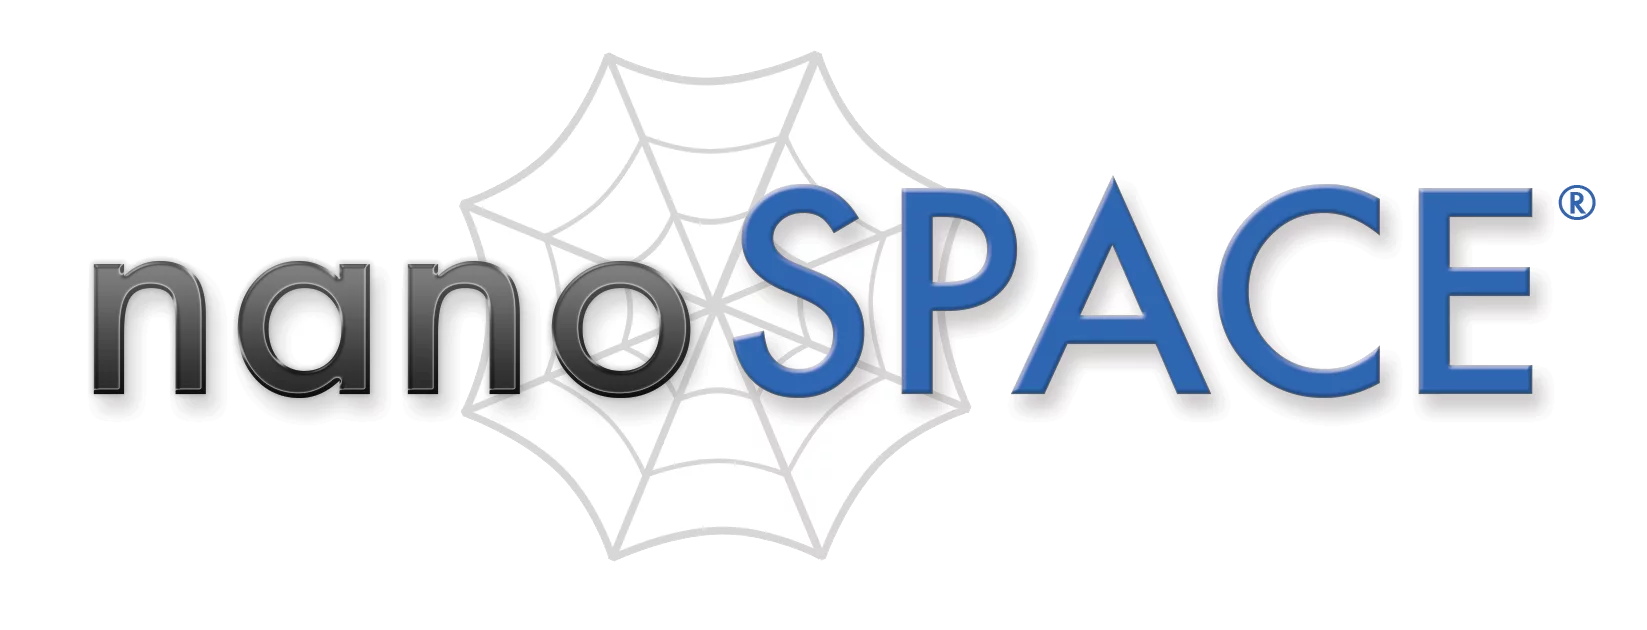 nanospace logo.png